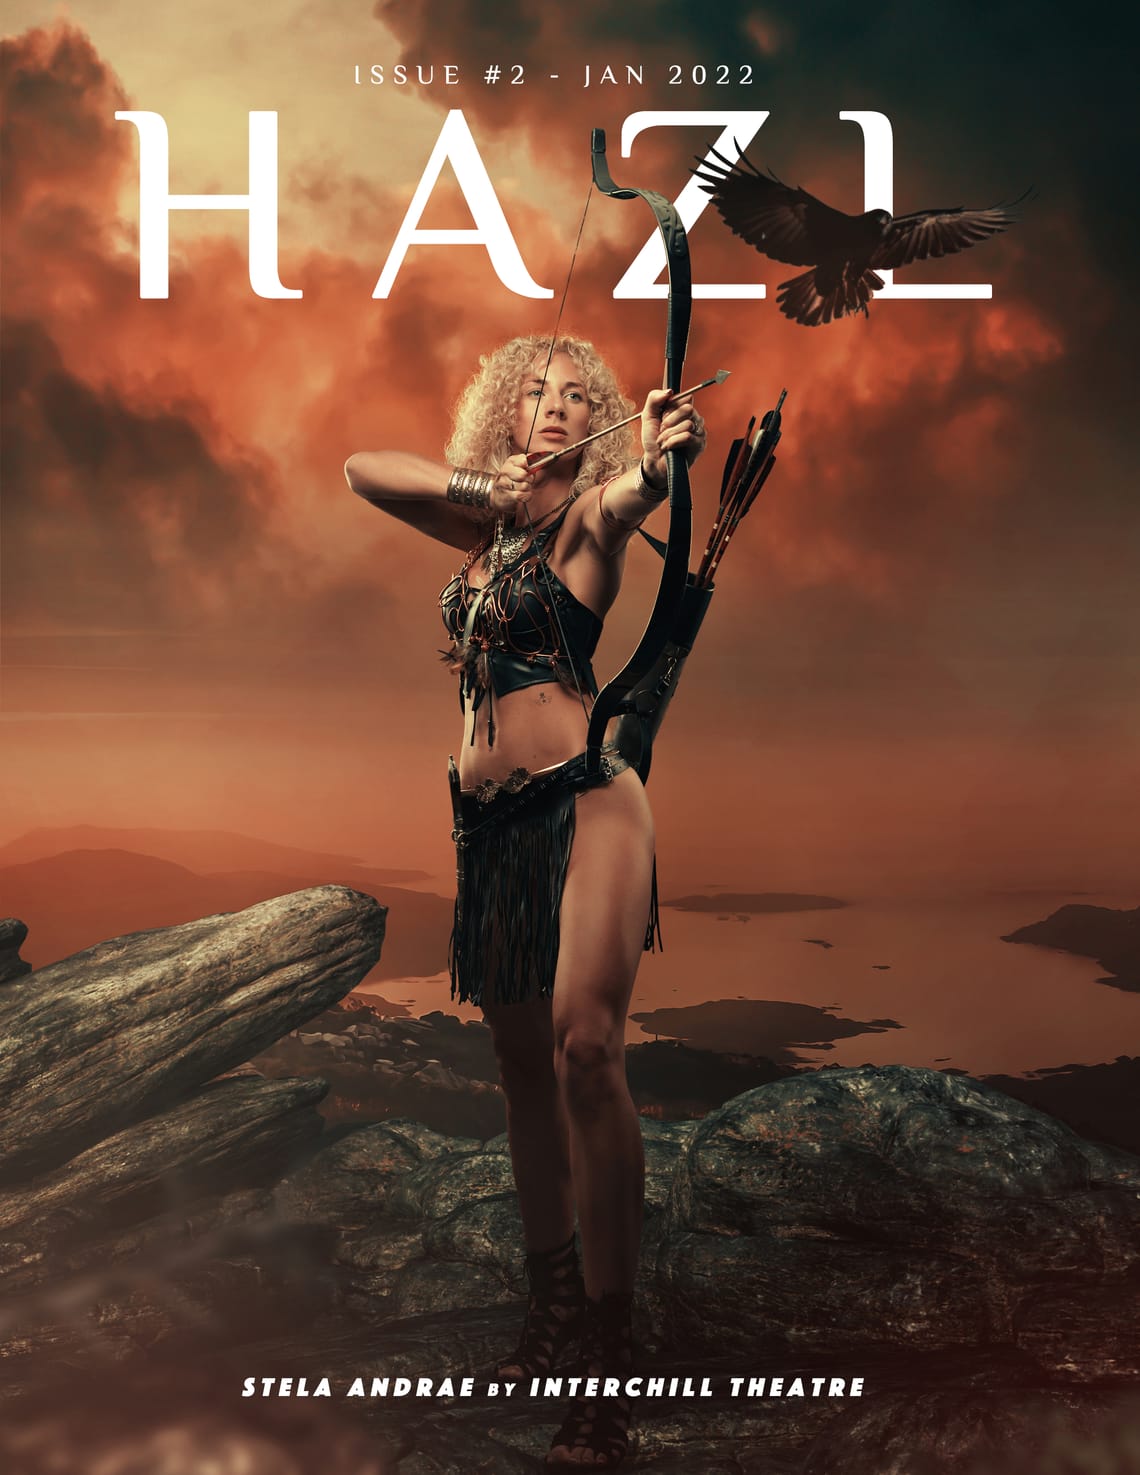 HAZL Magazine Issue #2 -  January 2022 Launched Worldwide